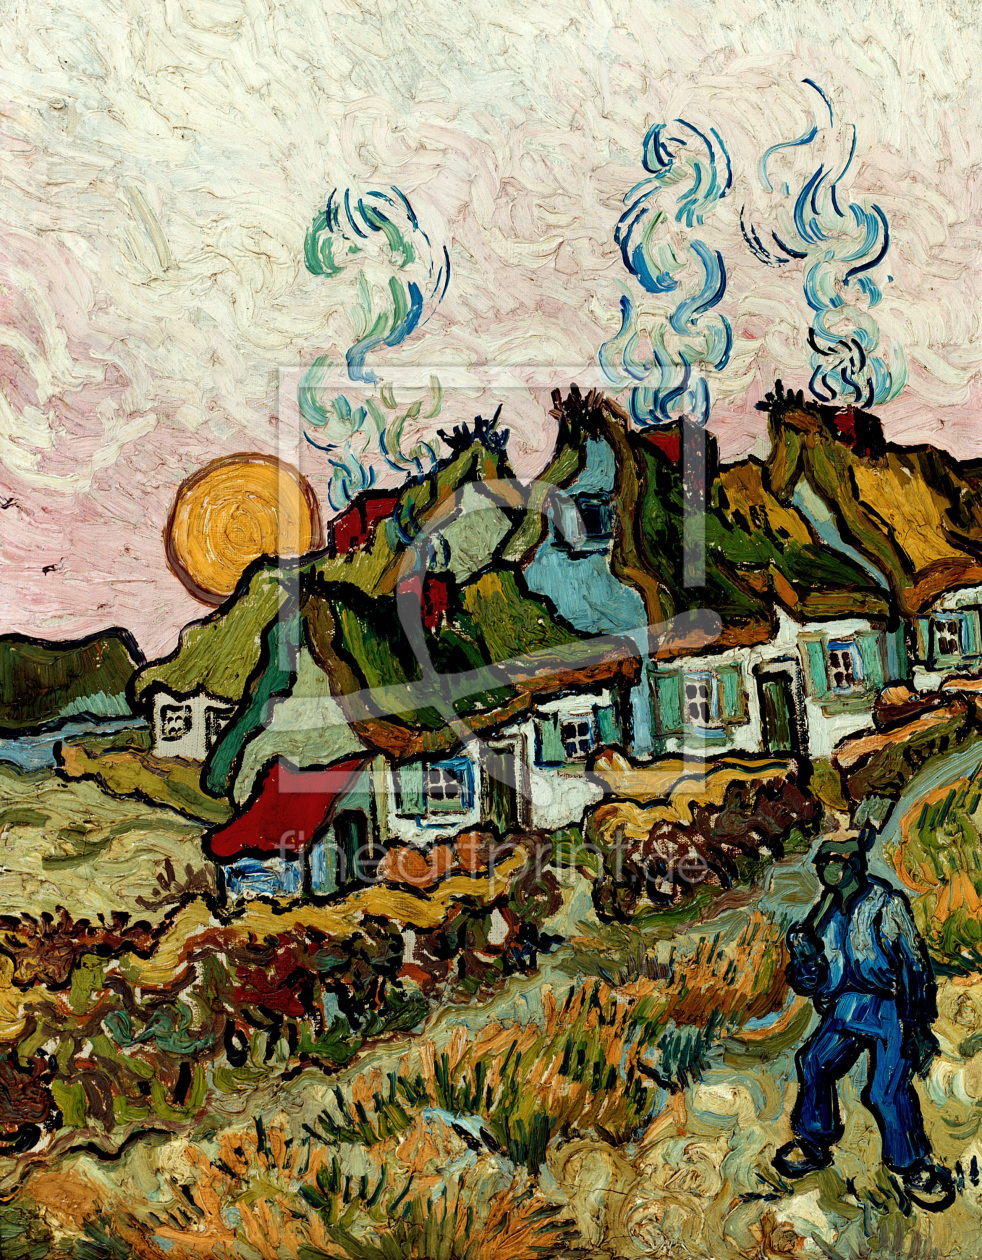 Bild-Nr.: 30003354 van Gogh / Farmhouses at sunset / 1890 erstellt von van Gogh, Vincent